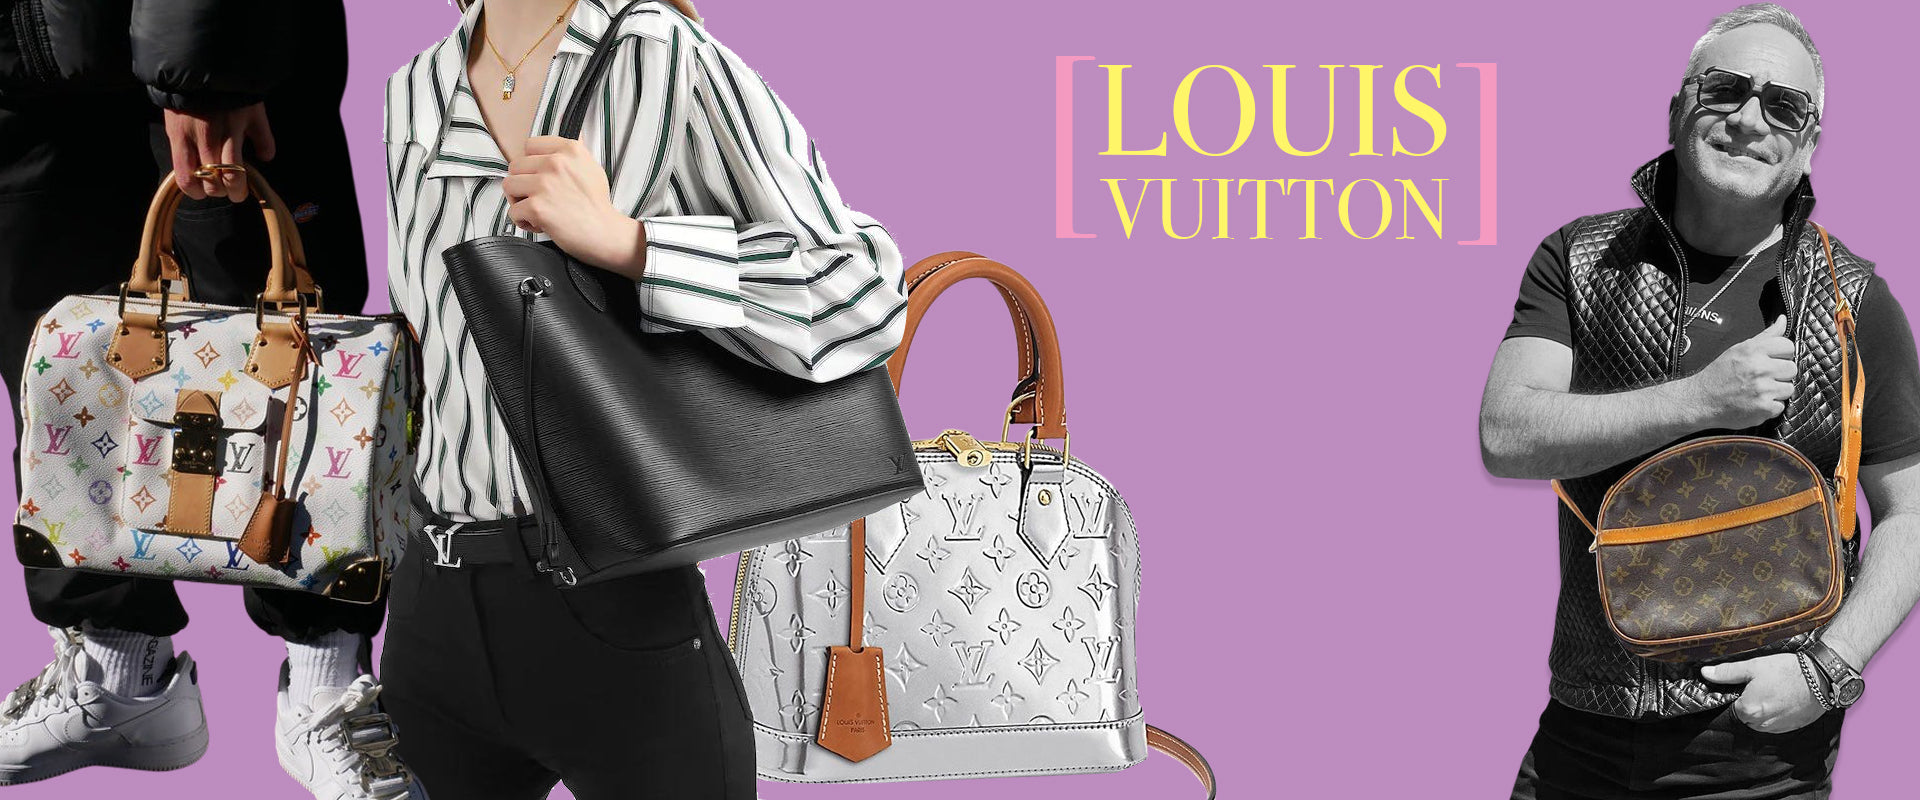 Moda en libros: los bolsos Louis Vuitton